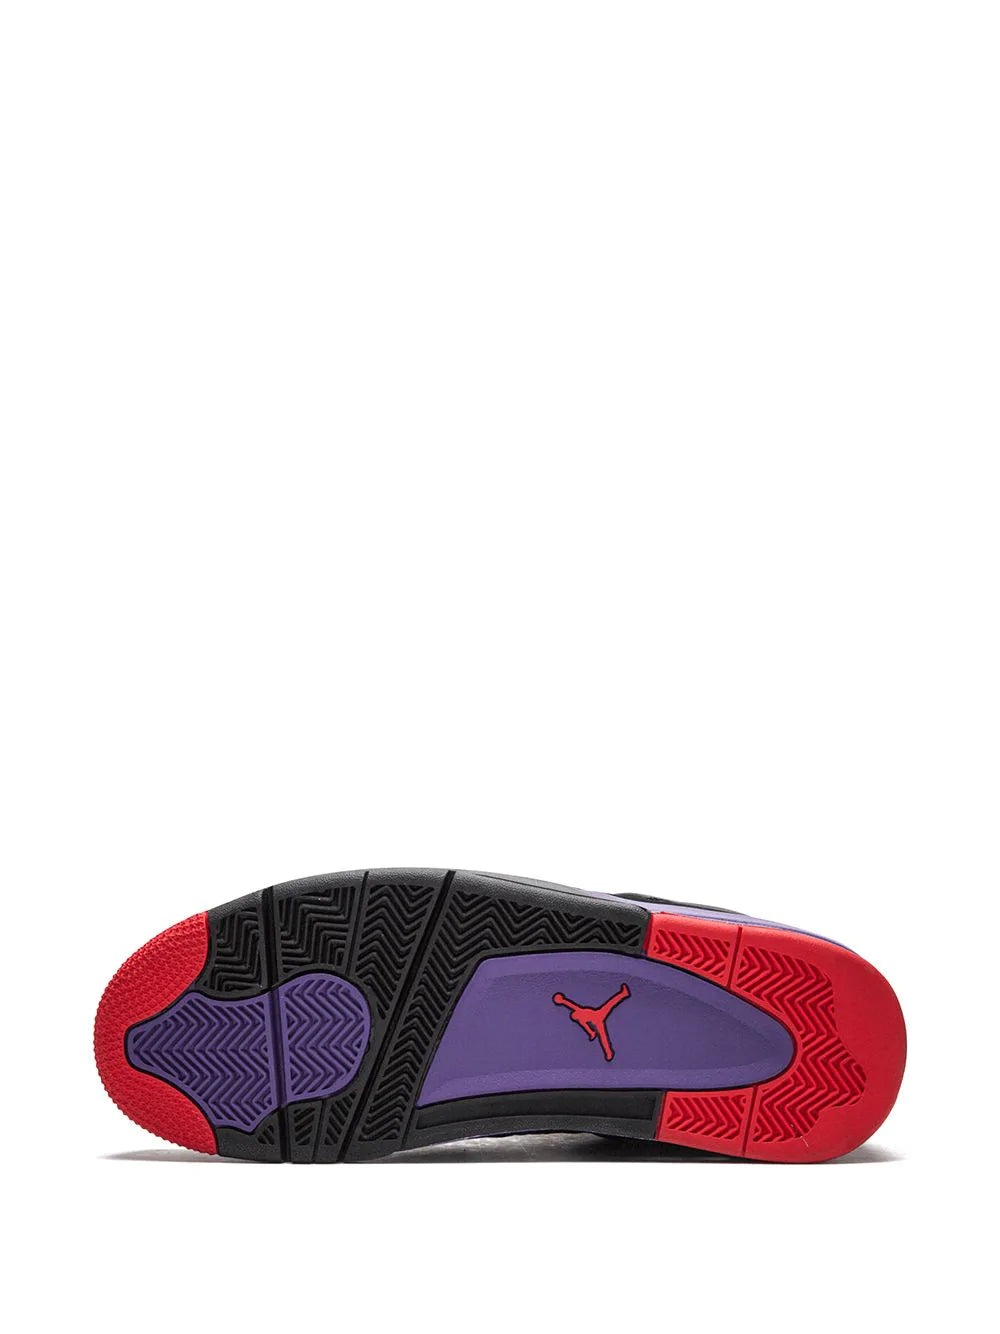 Jordan 4 Black/Purple